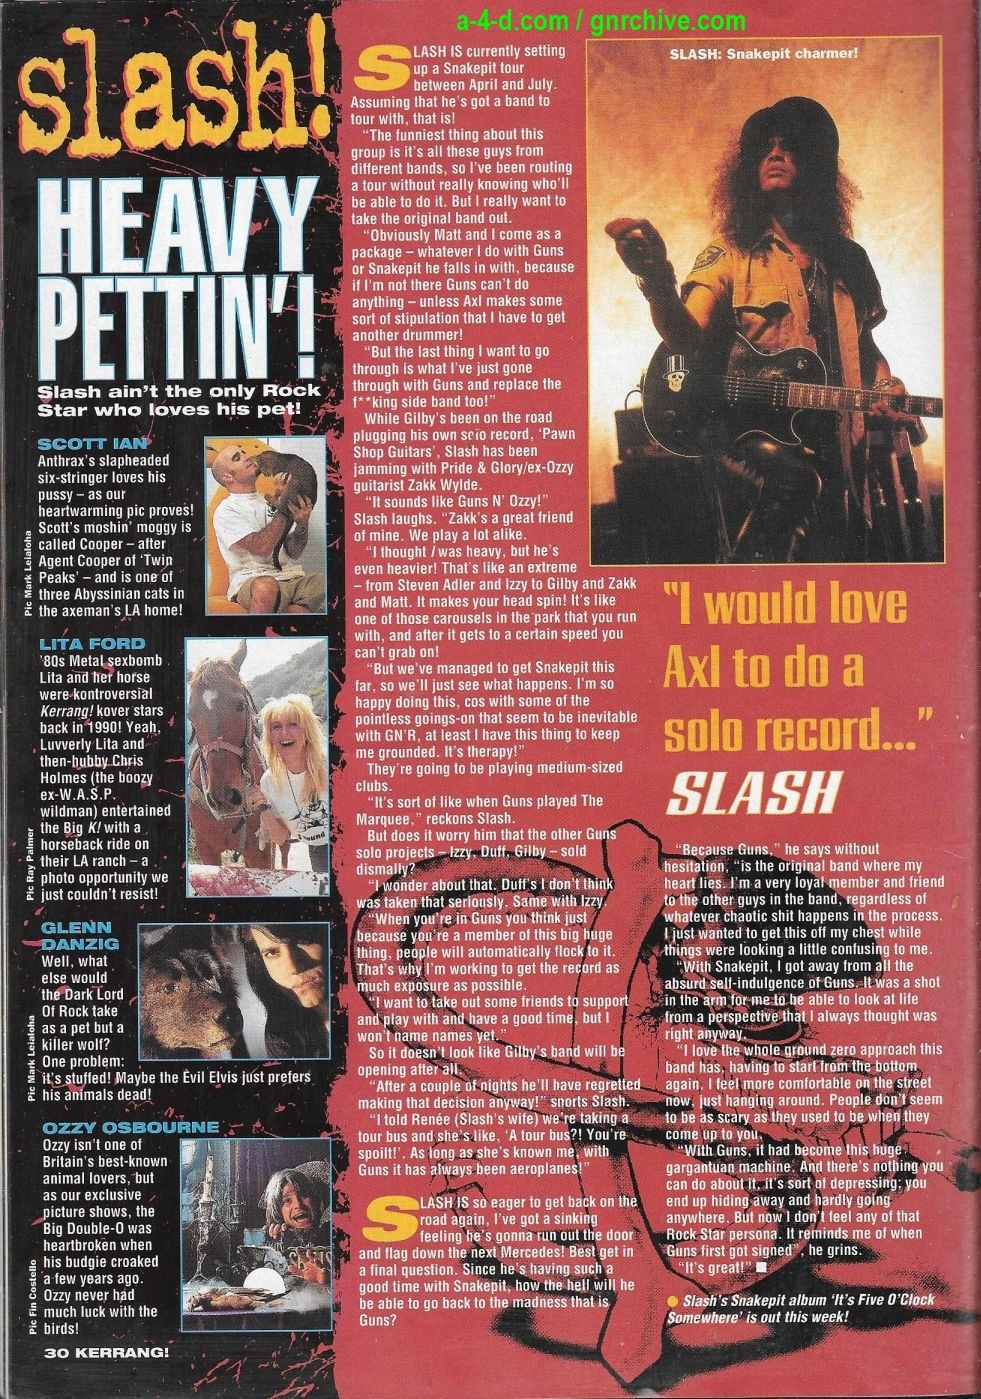 1995.02.18 - Kerrang! - Suicide! Lies! Axl! Snakes! Heavy Metal! (Slash) 1995_070